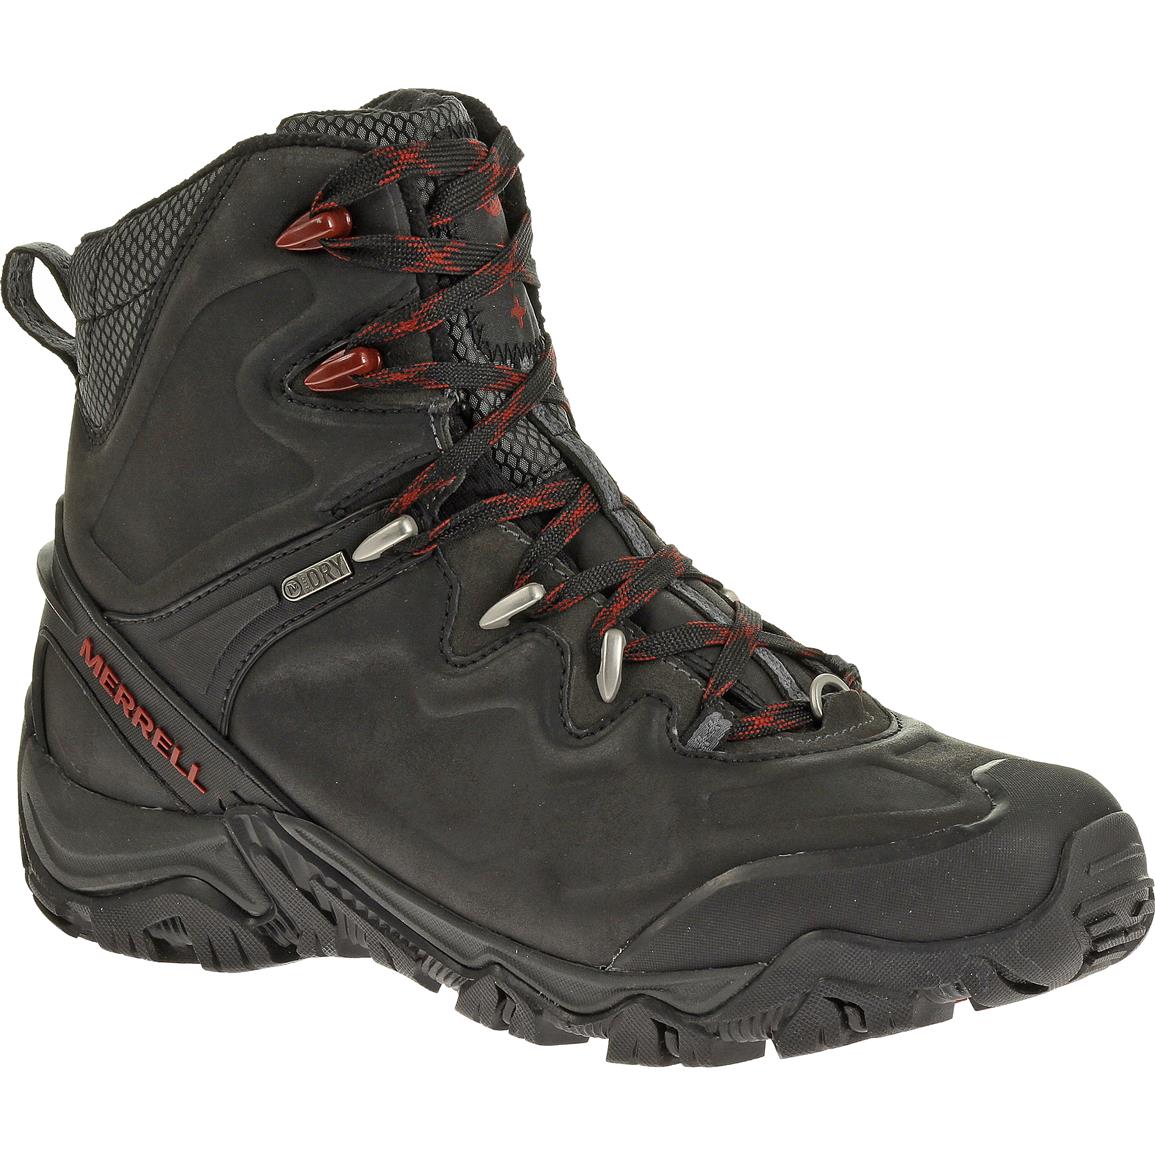 Merrell Polarand Winter Hiking Boots, Waterproof, Insulated, 8